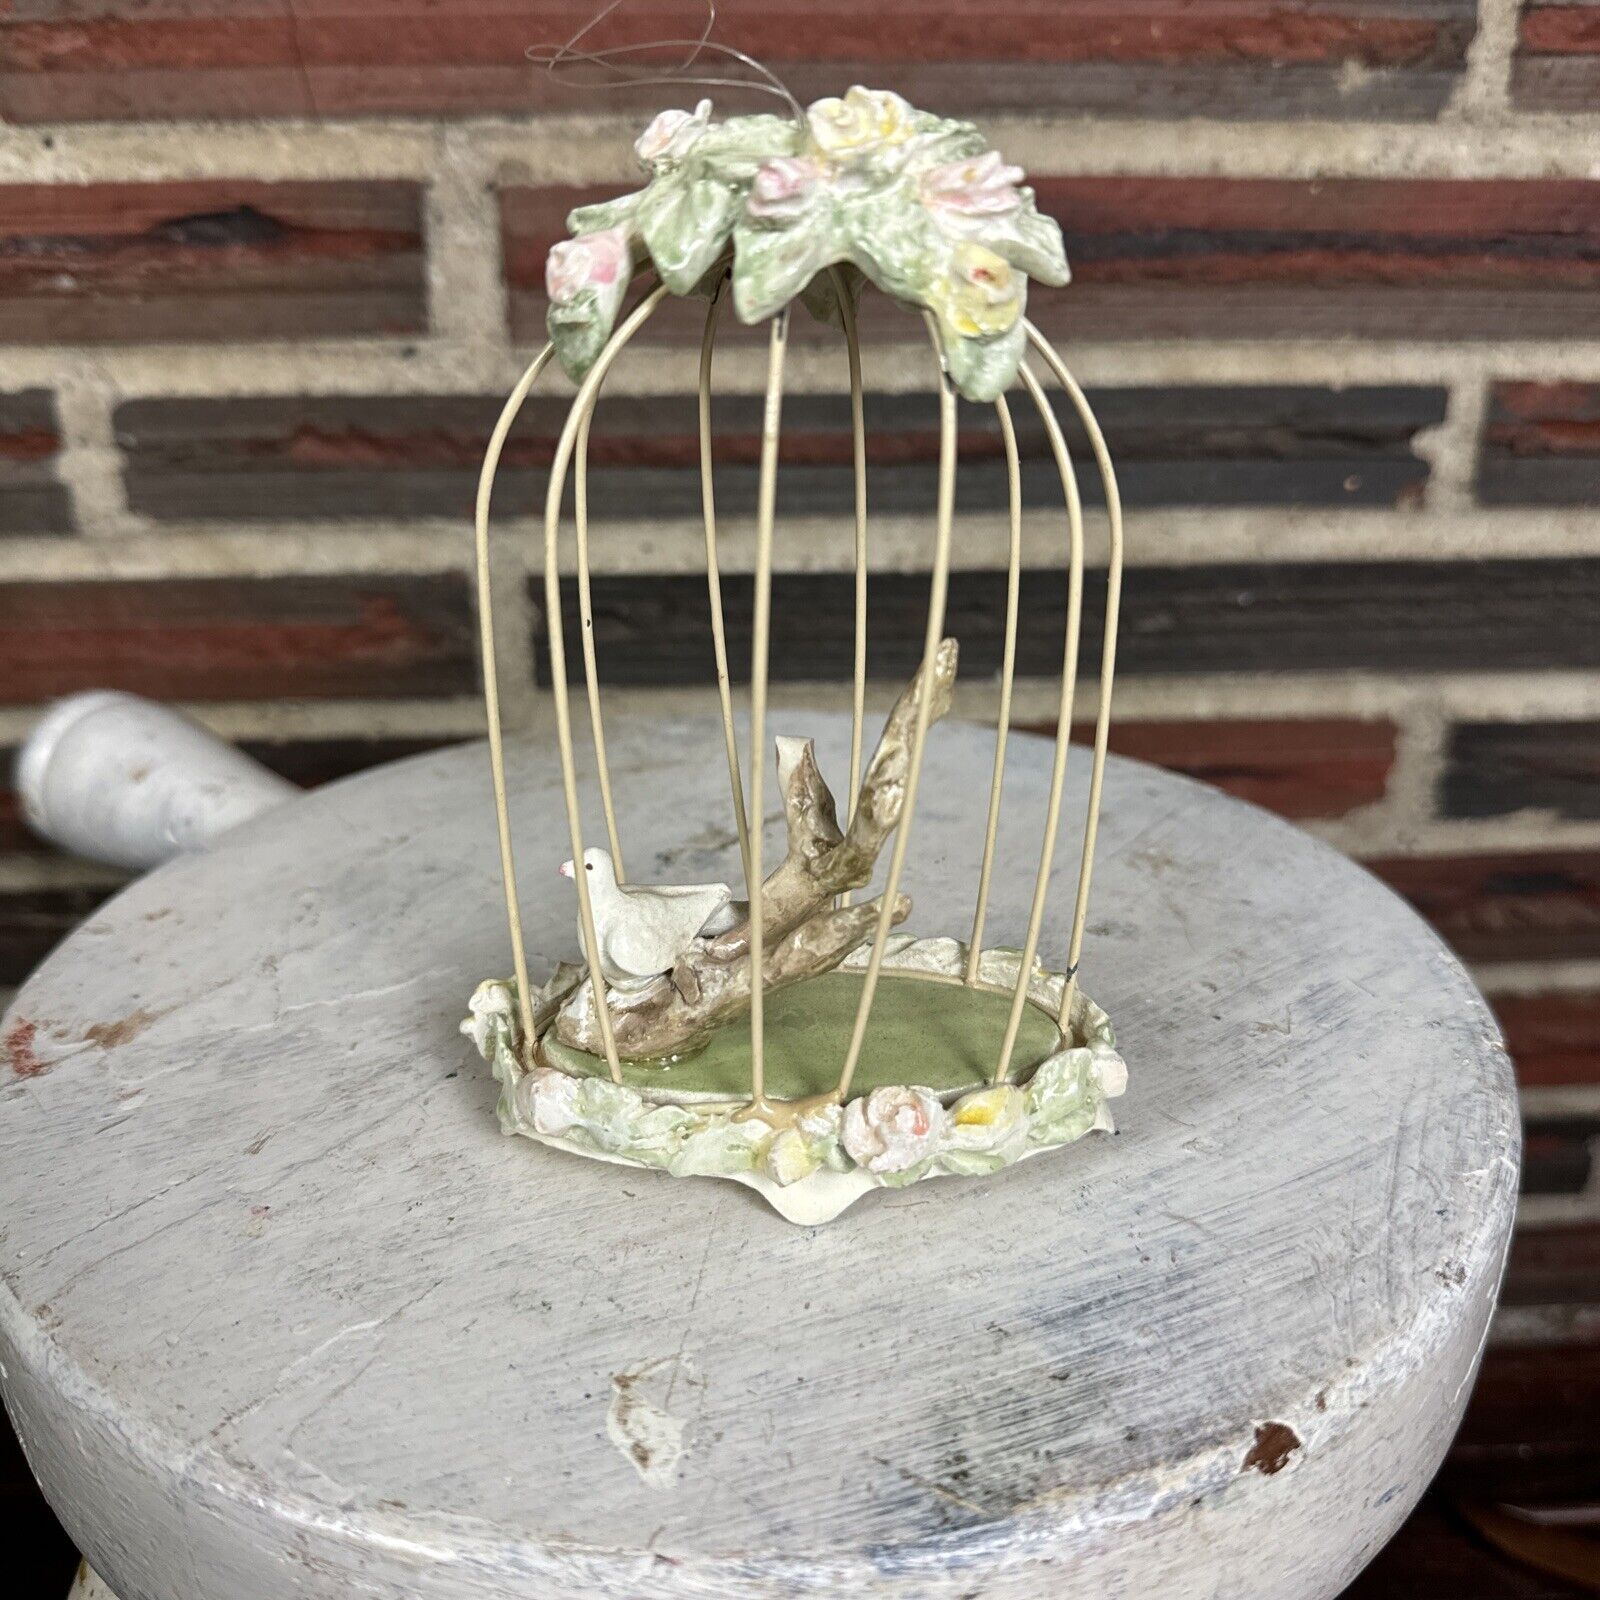 Vintage Bird Cage Metal Doves Inside Hanging Ornament White Ivory Flowers Floral